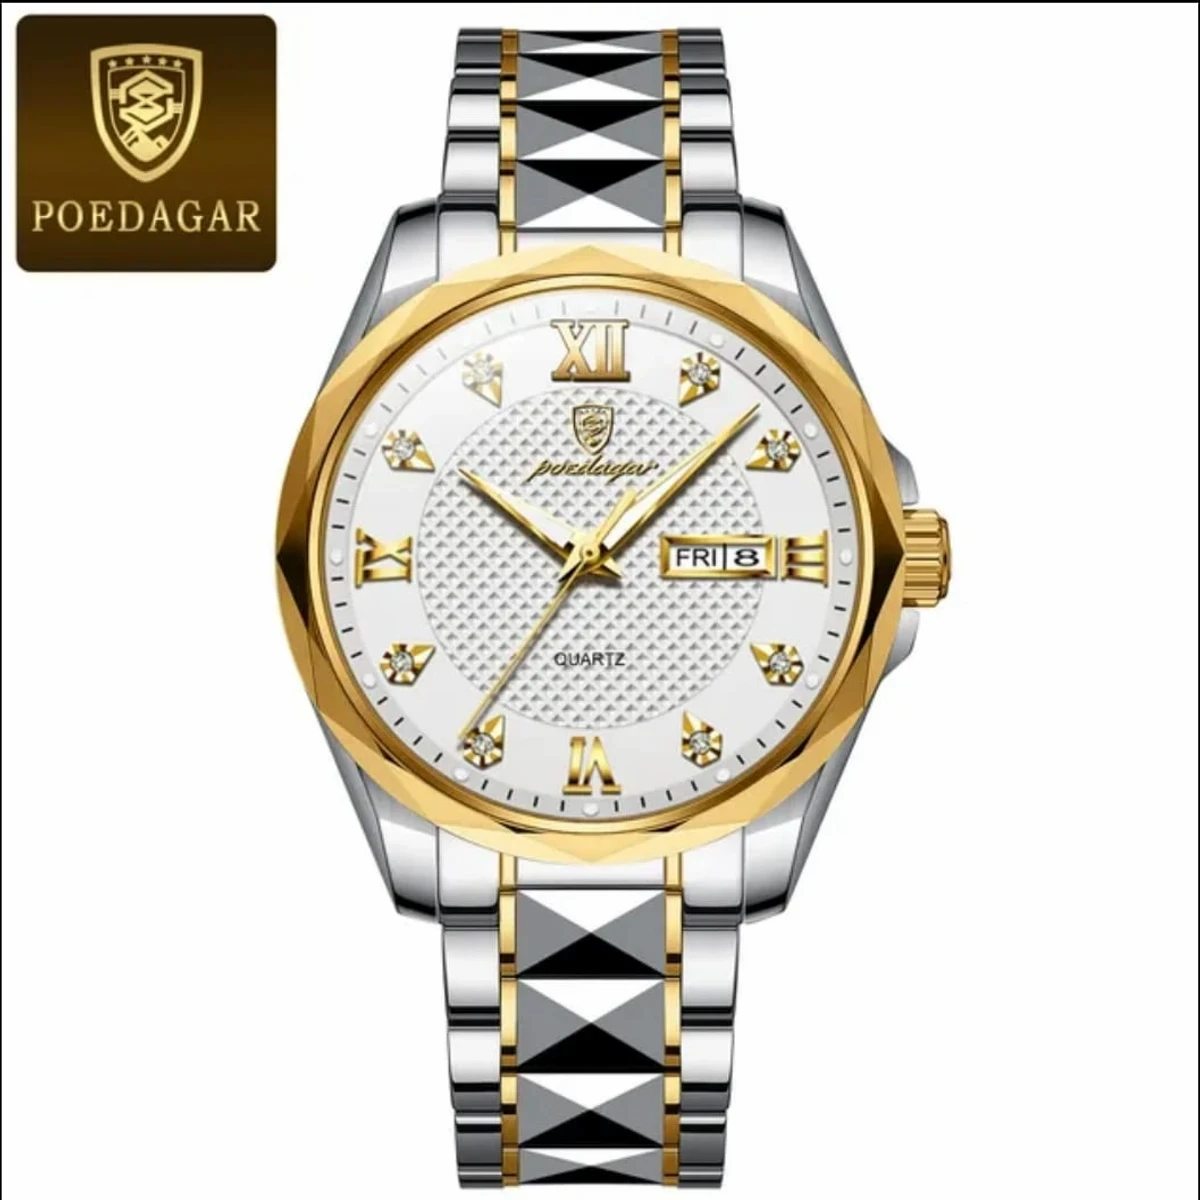 POEDAGAR Luxury Watches for Man Waterproof Luminous Galendar Dial High Fashion Quartz Wristwatch Model Number：998 Full Golden Cooler Watch